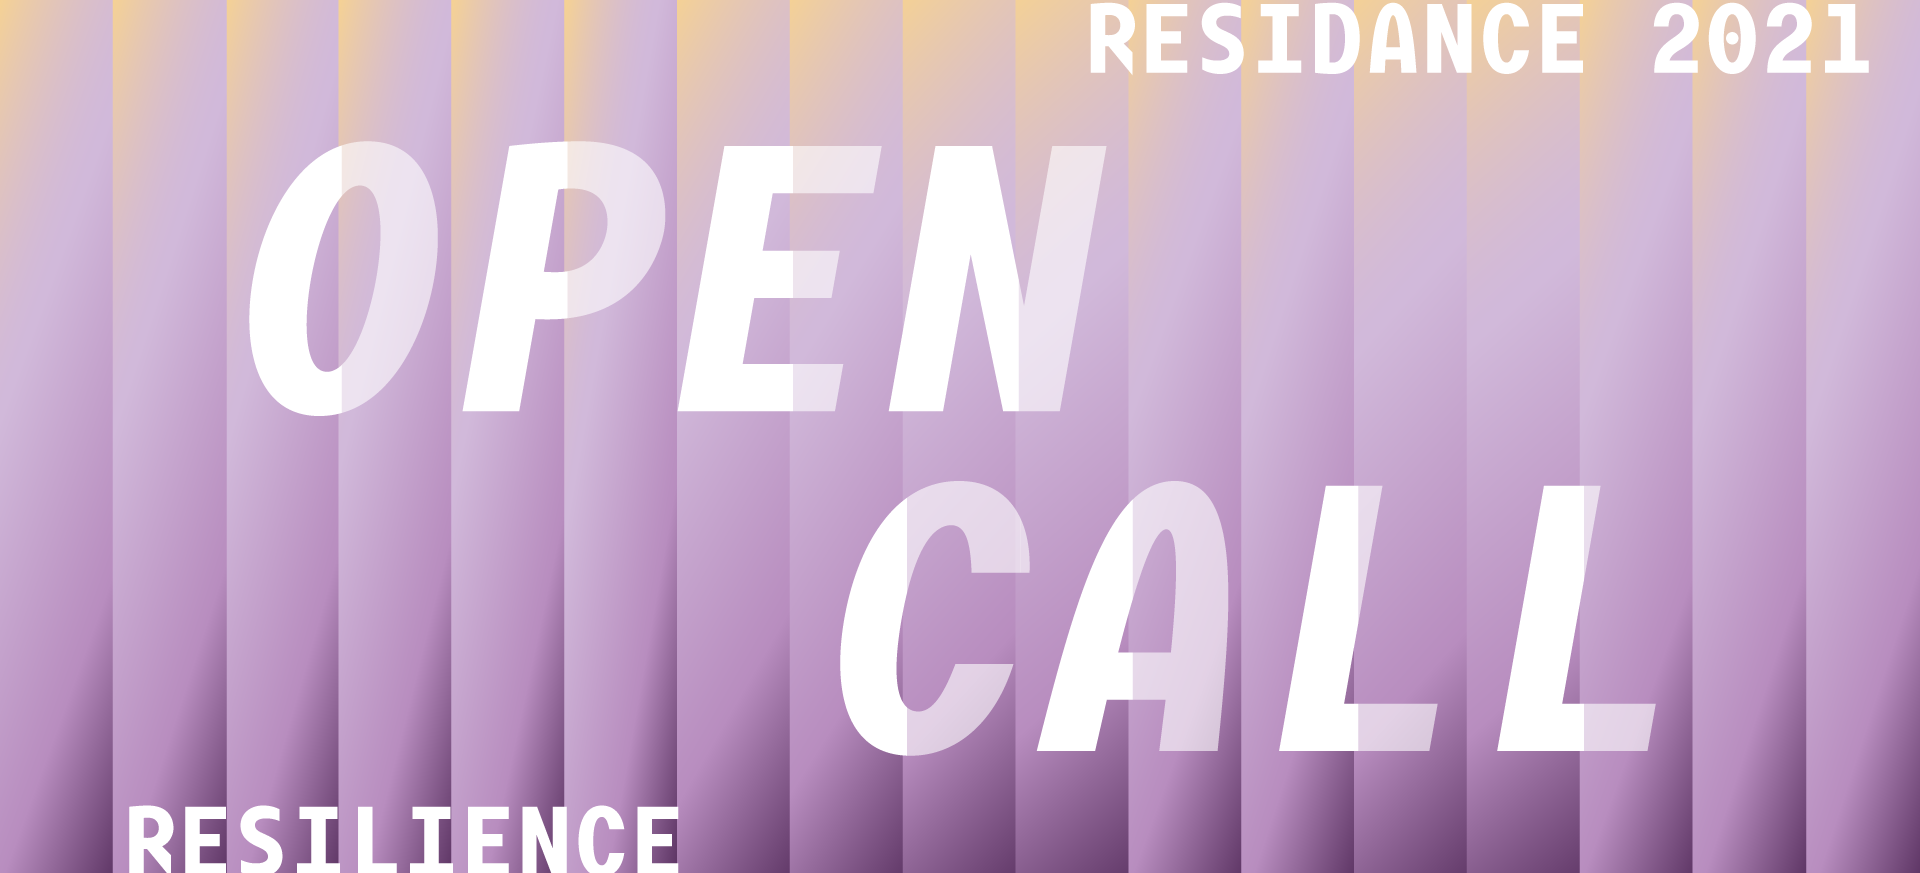 REZIDENCIE RESIDANCE 2021: OPEN CALL